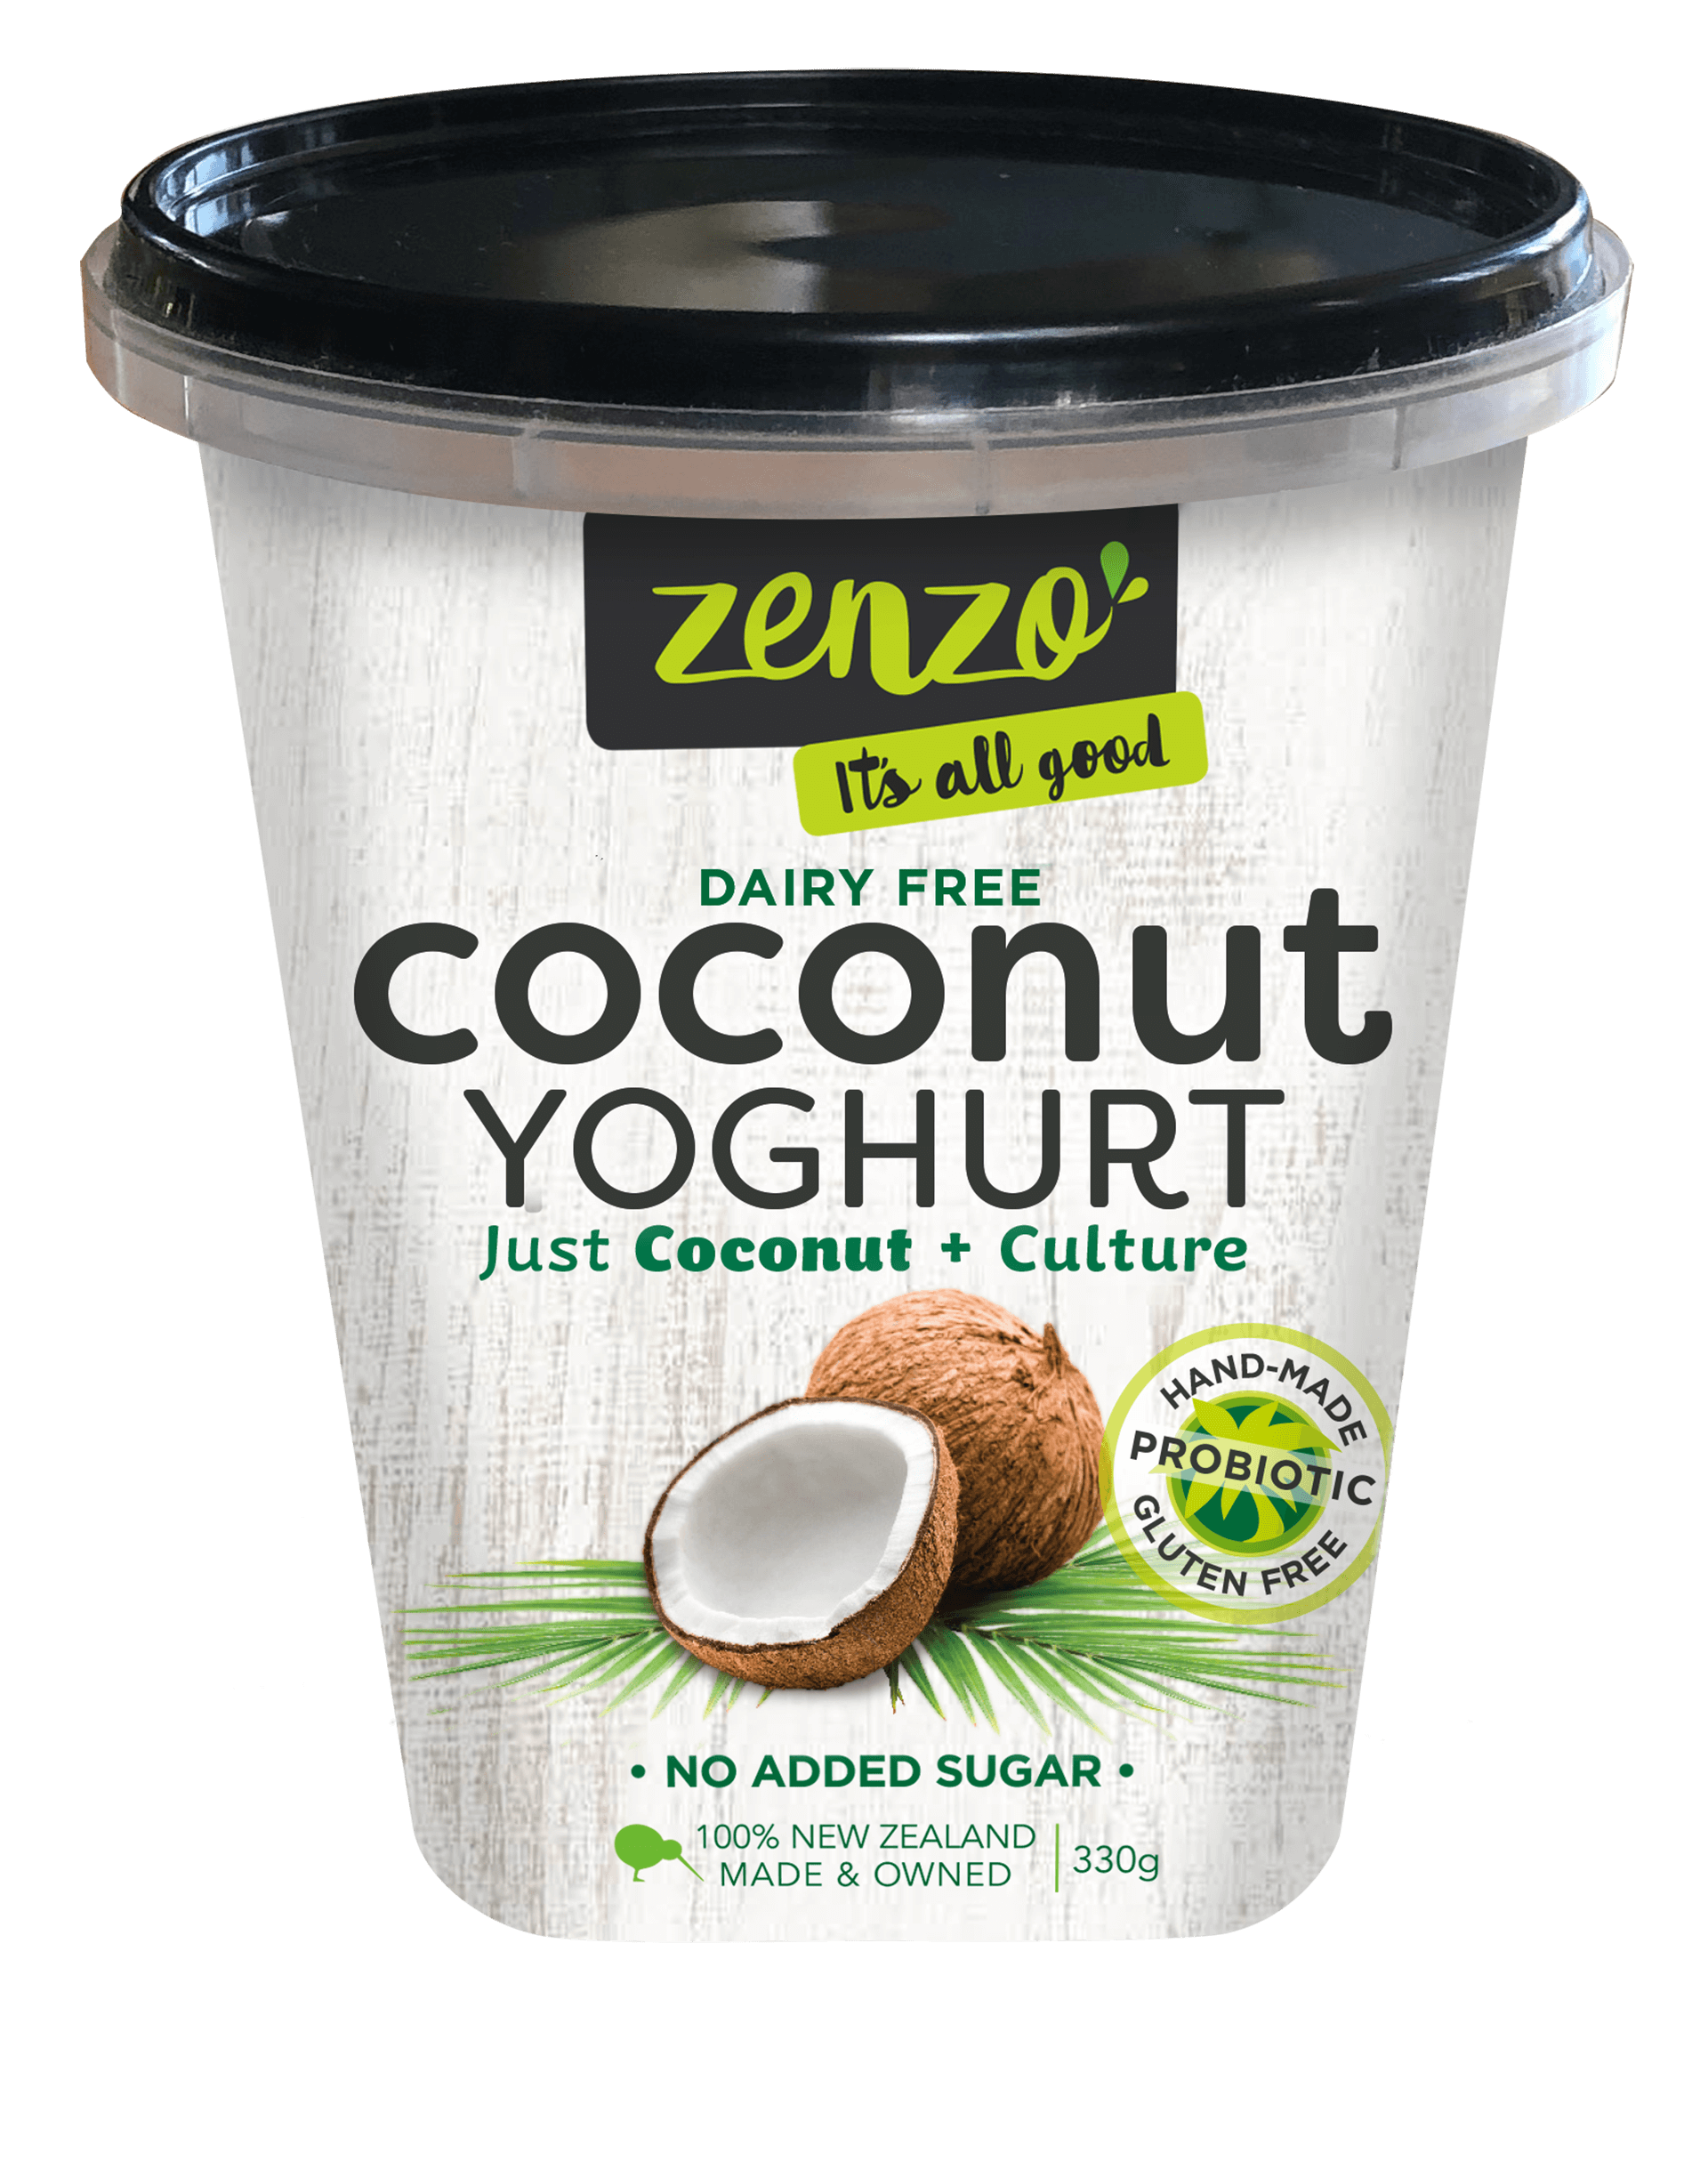 Zenzo Tonzu Product Categories Yoghurts